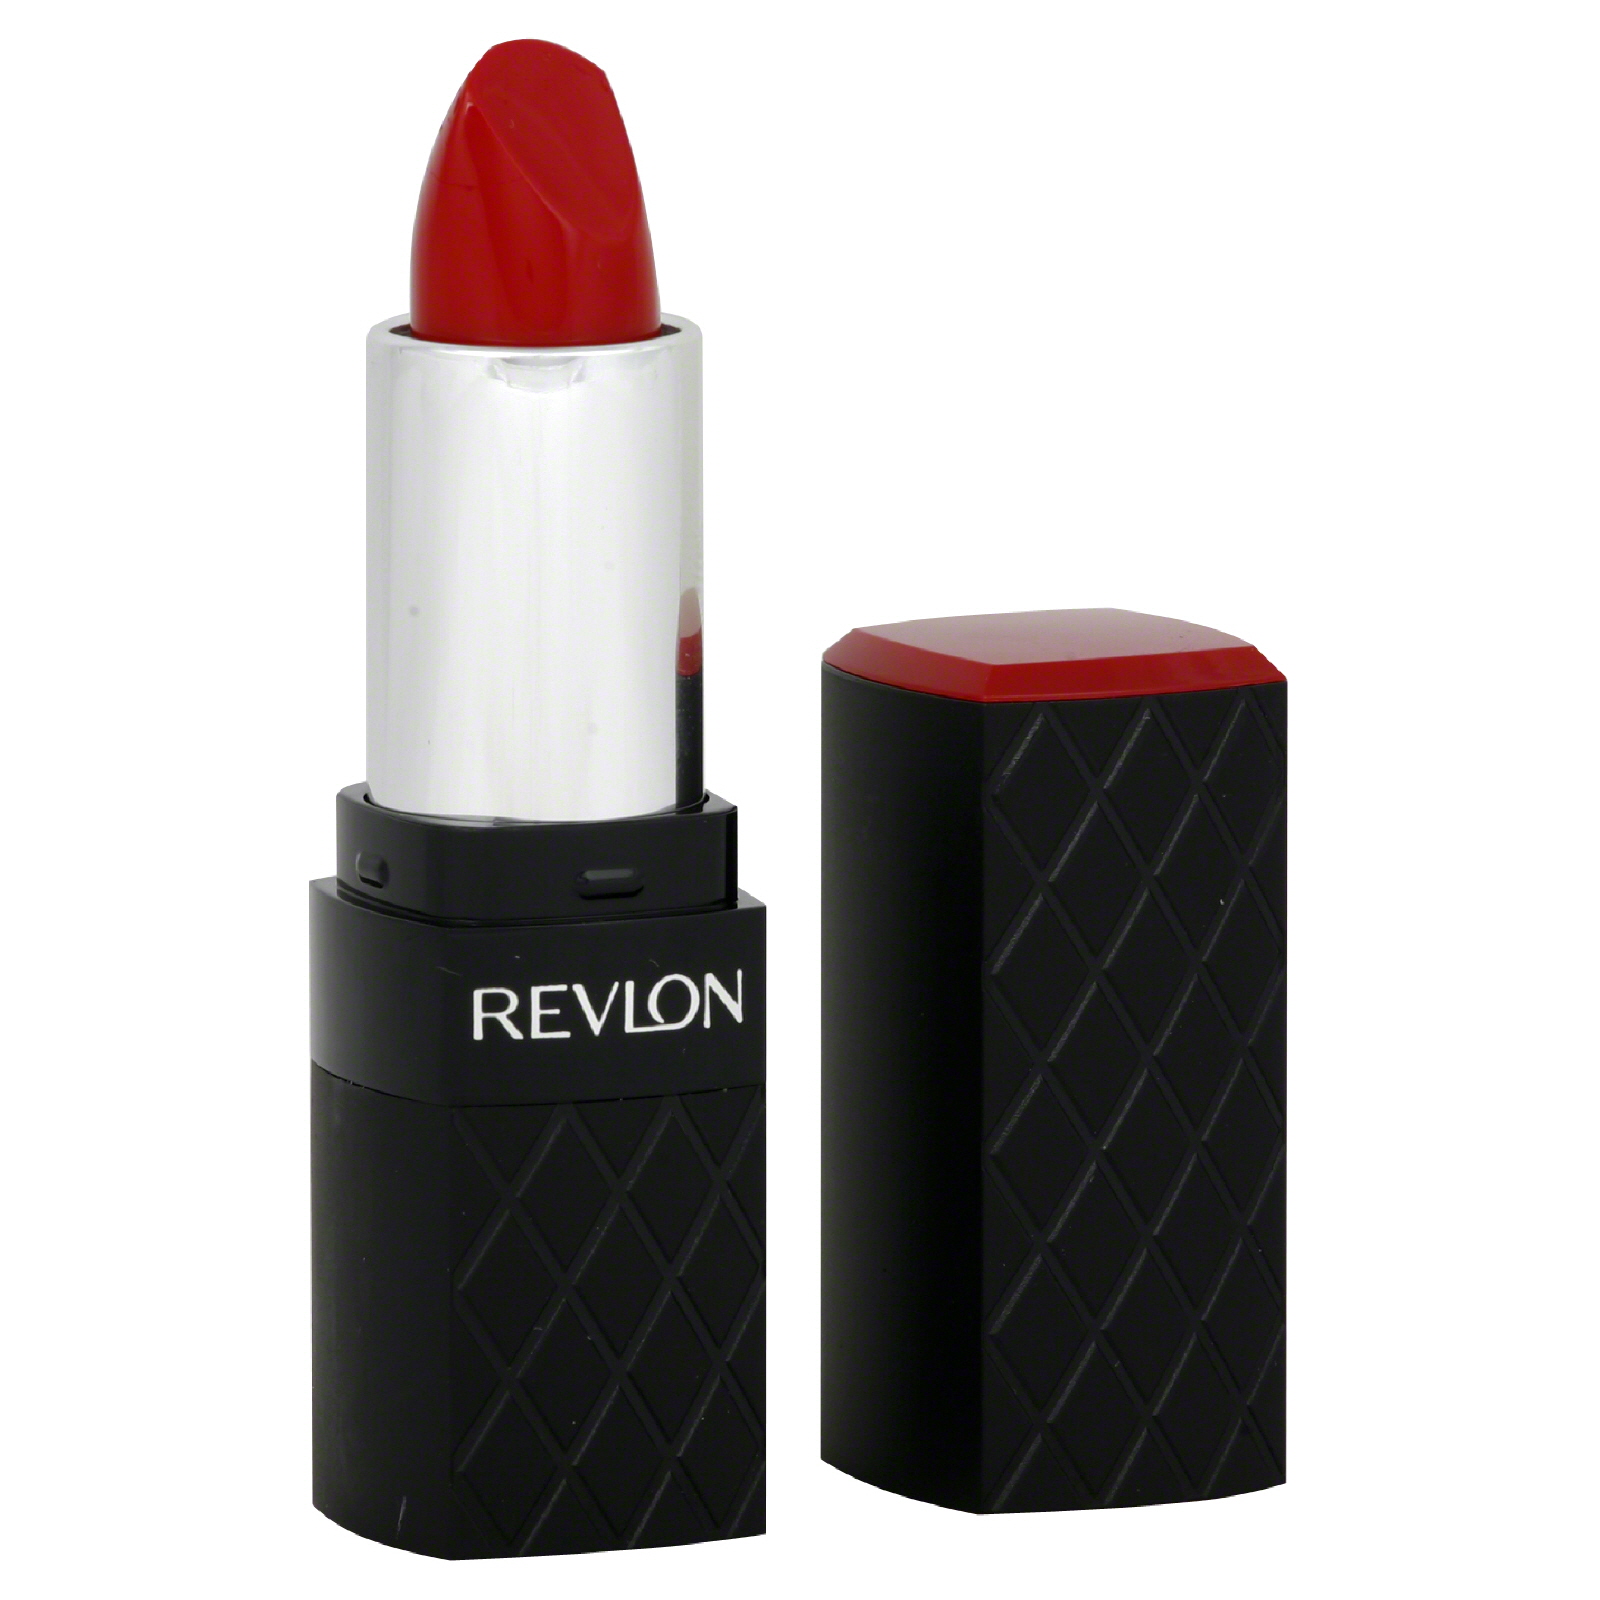 Revlon Lipstick, True Red 090, 0.13 oz (3.7 g)